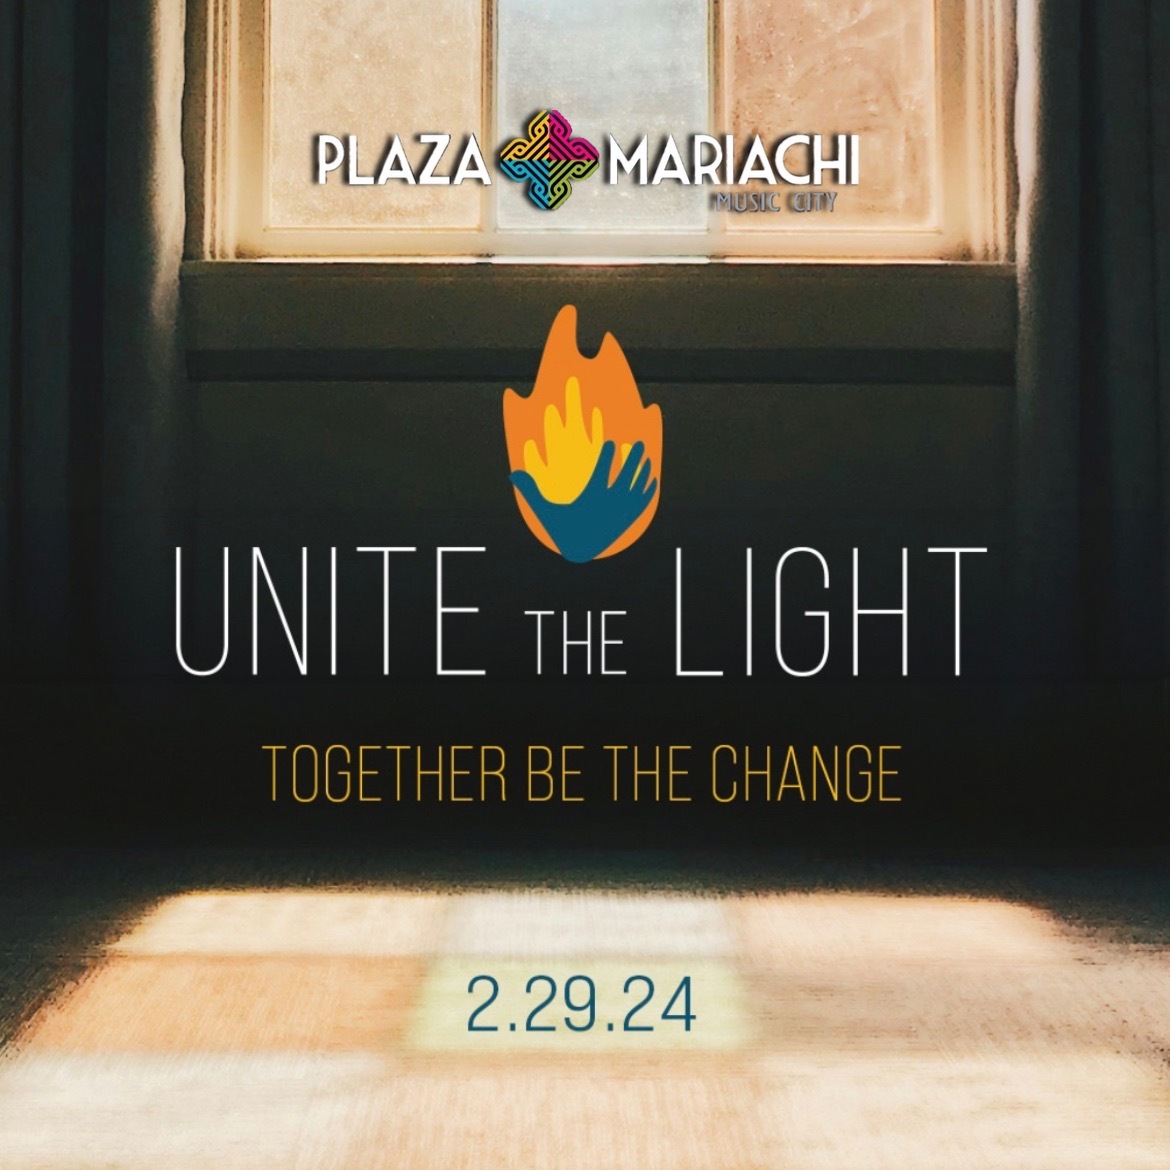 Unite the Light Event